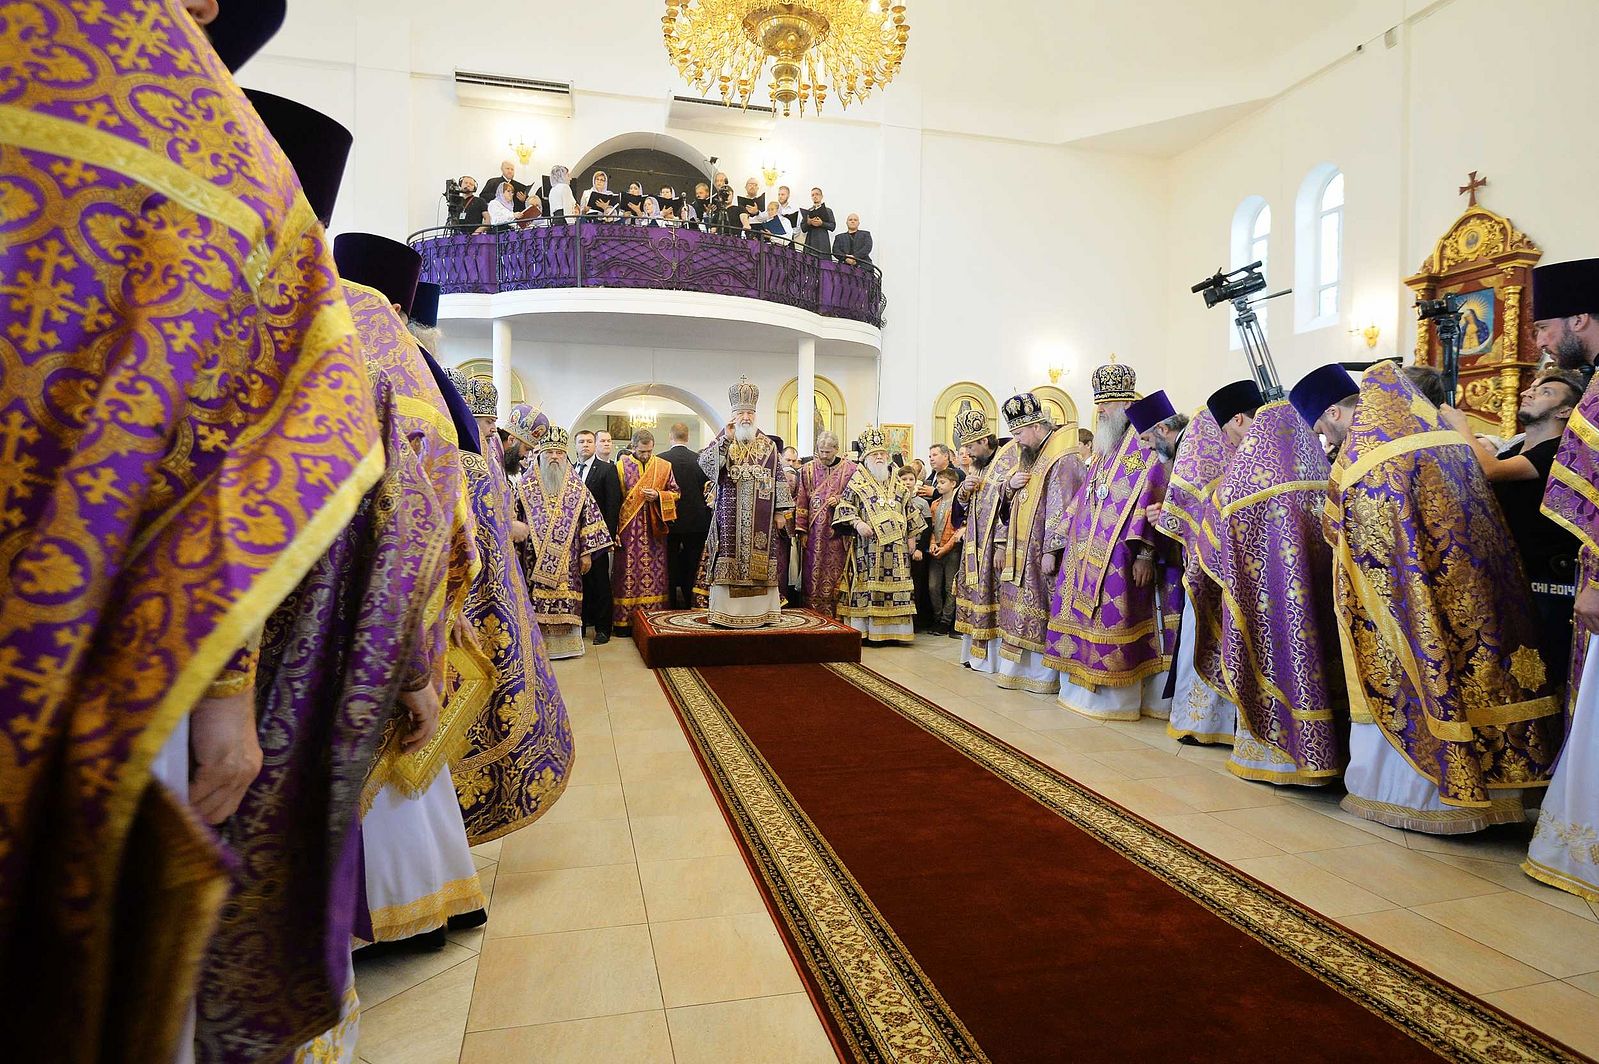 свято троицкий собор армавир